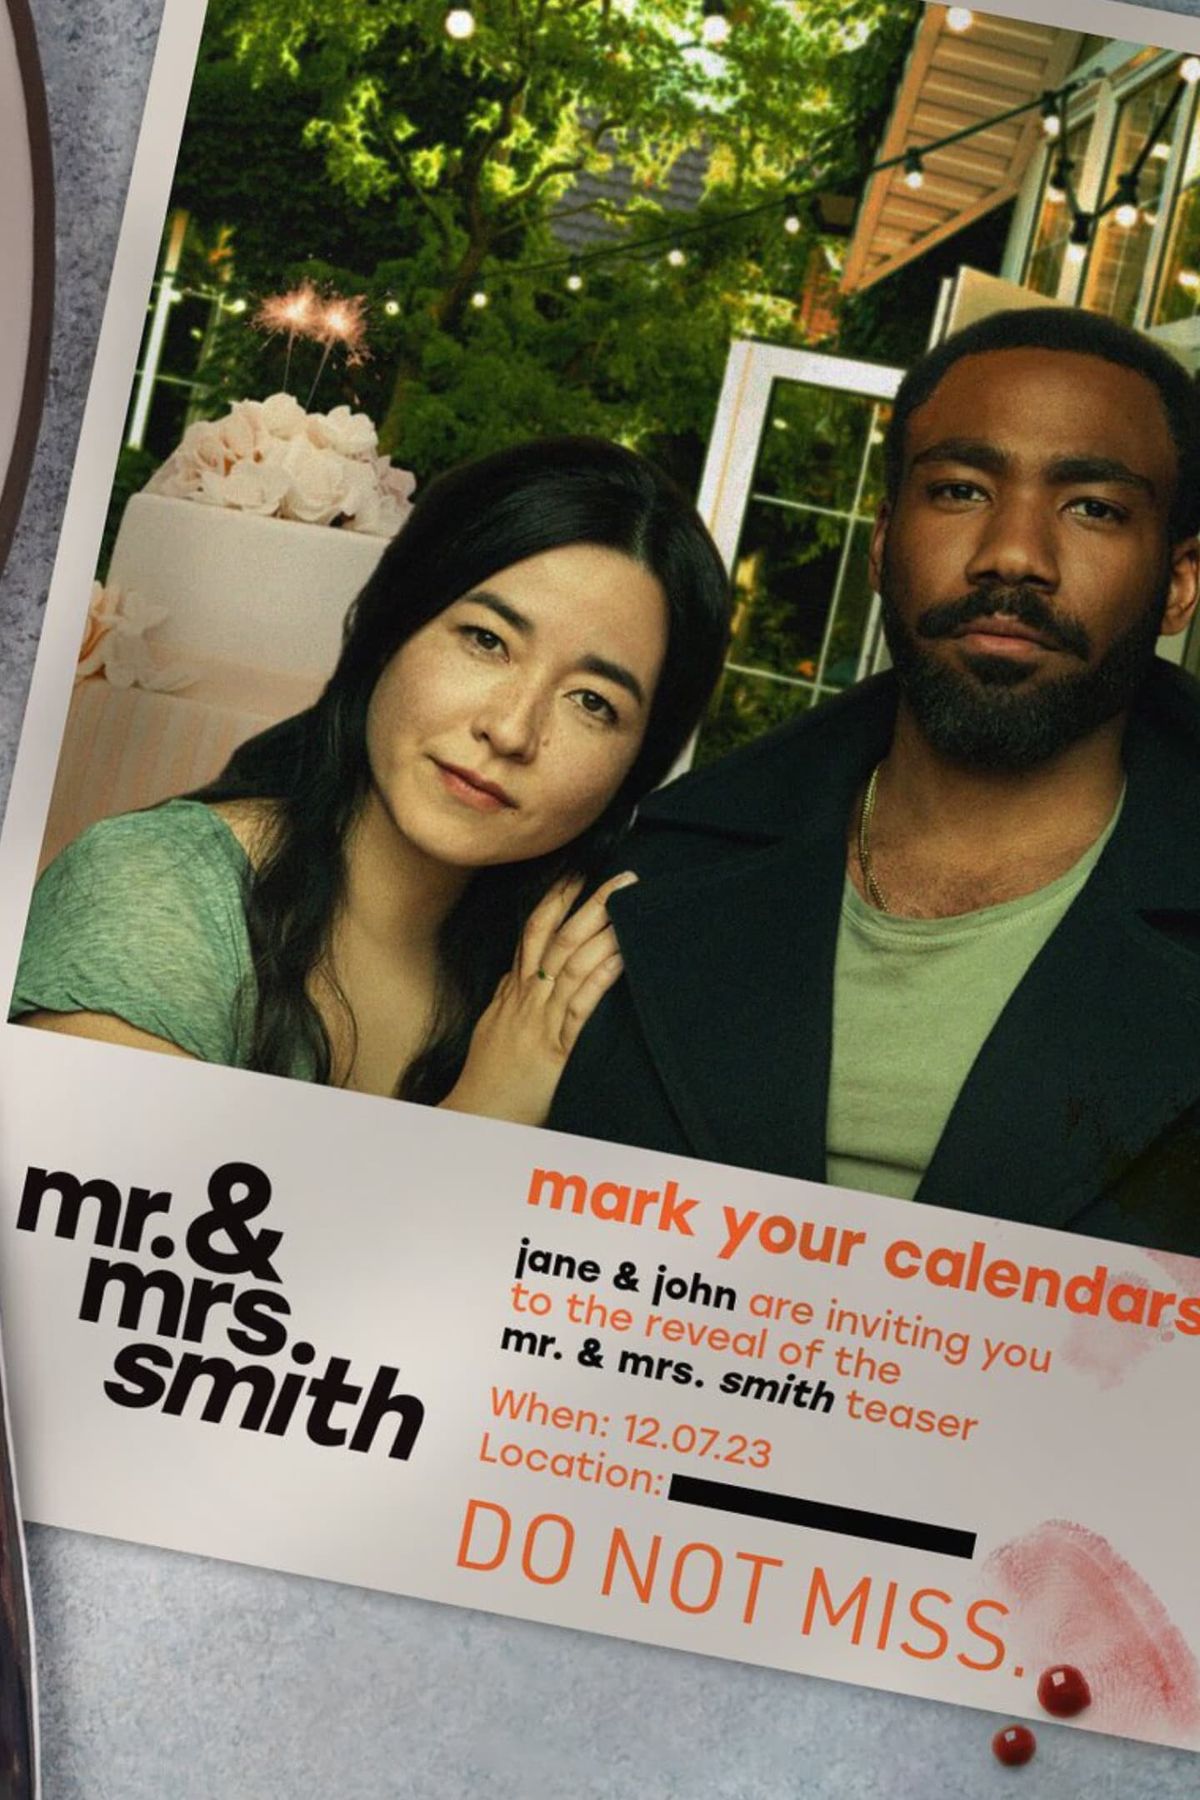 Mr. & Mrs. Smith (2024) TV Show Information & Trailers KinoCheck